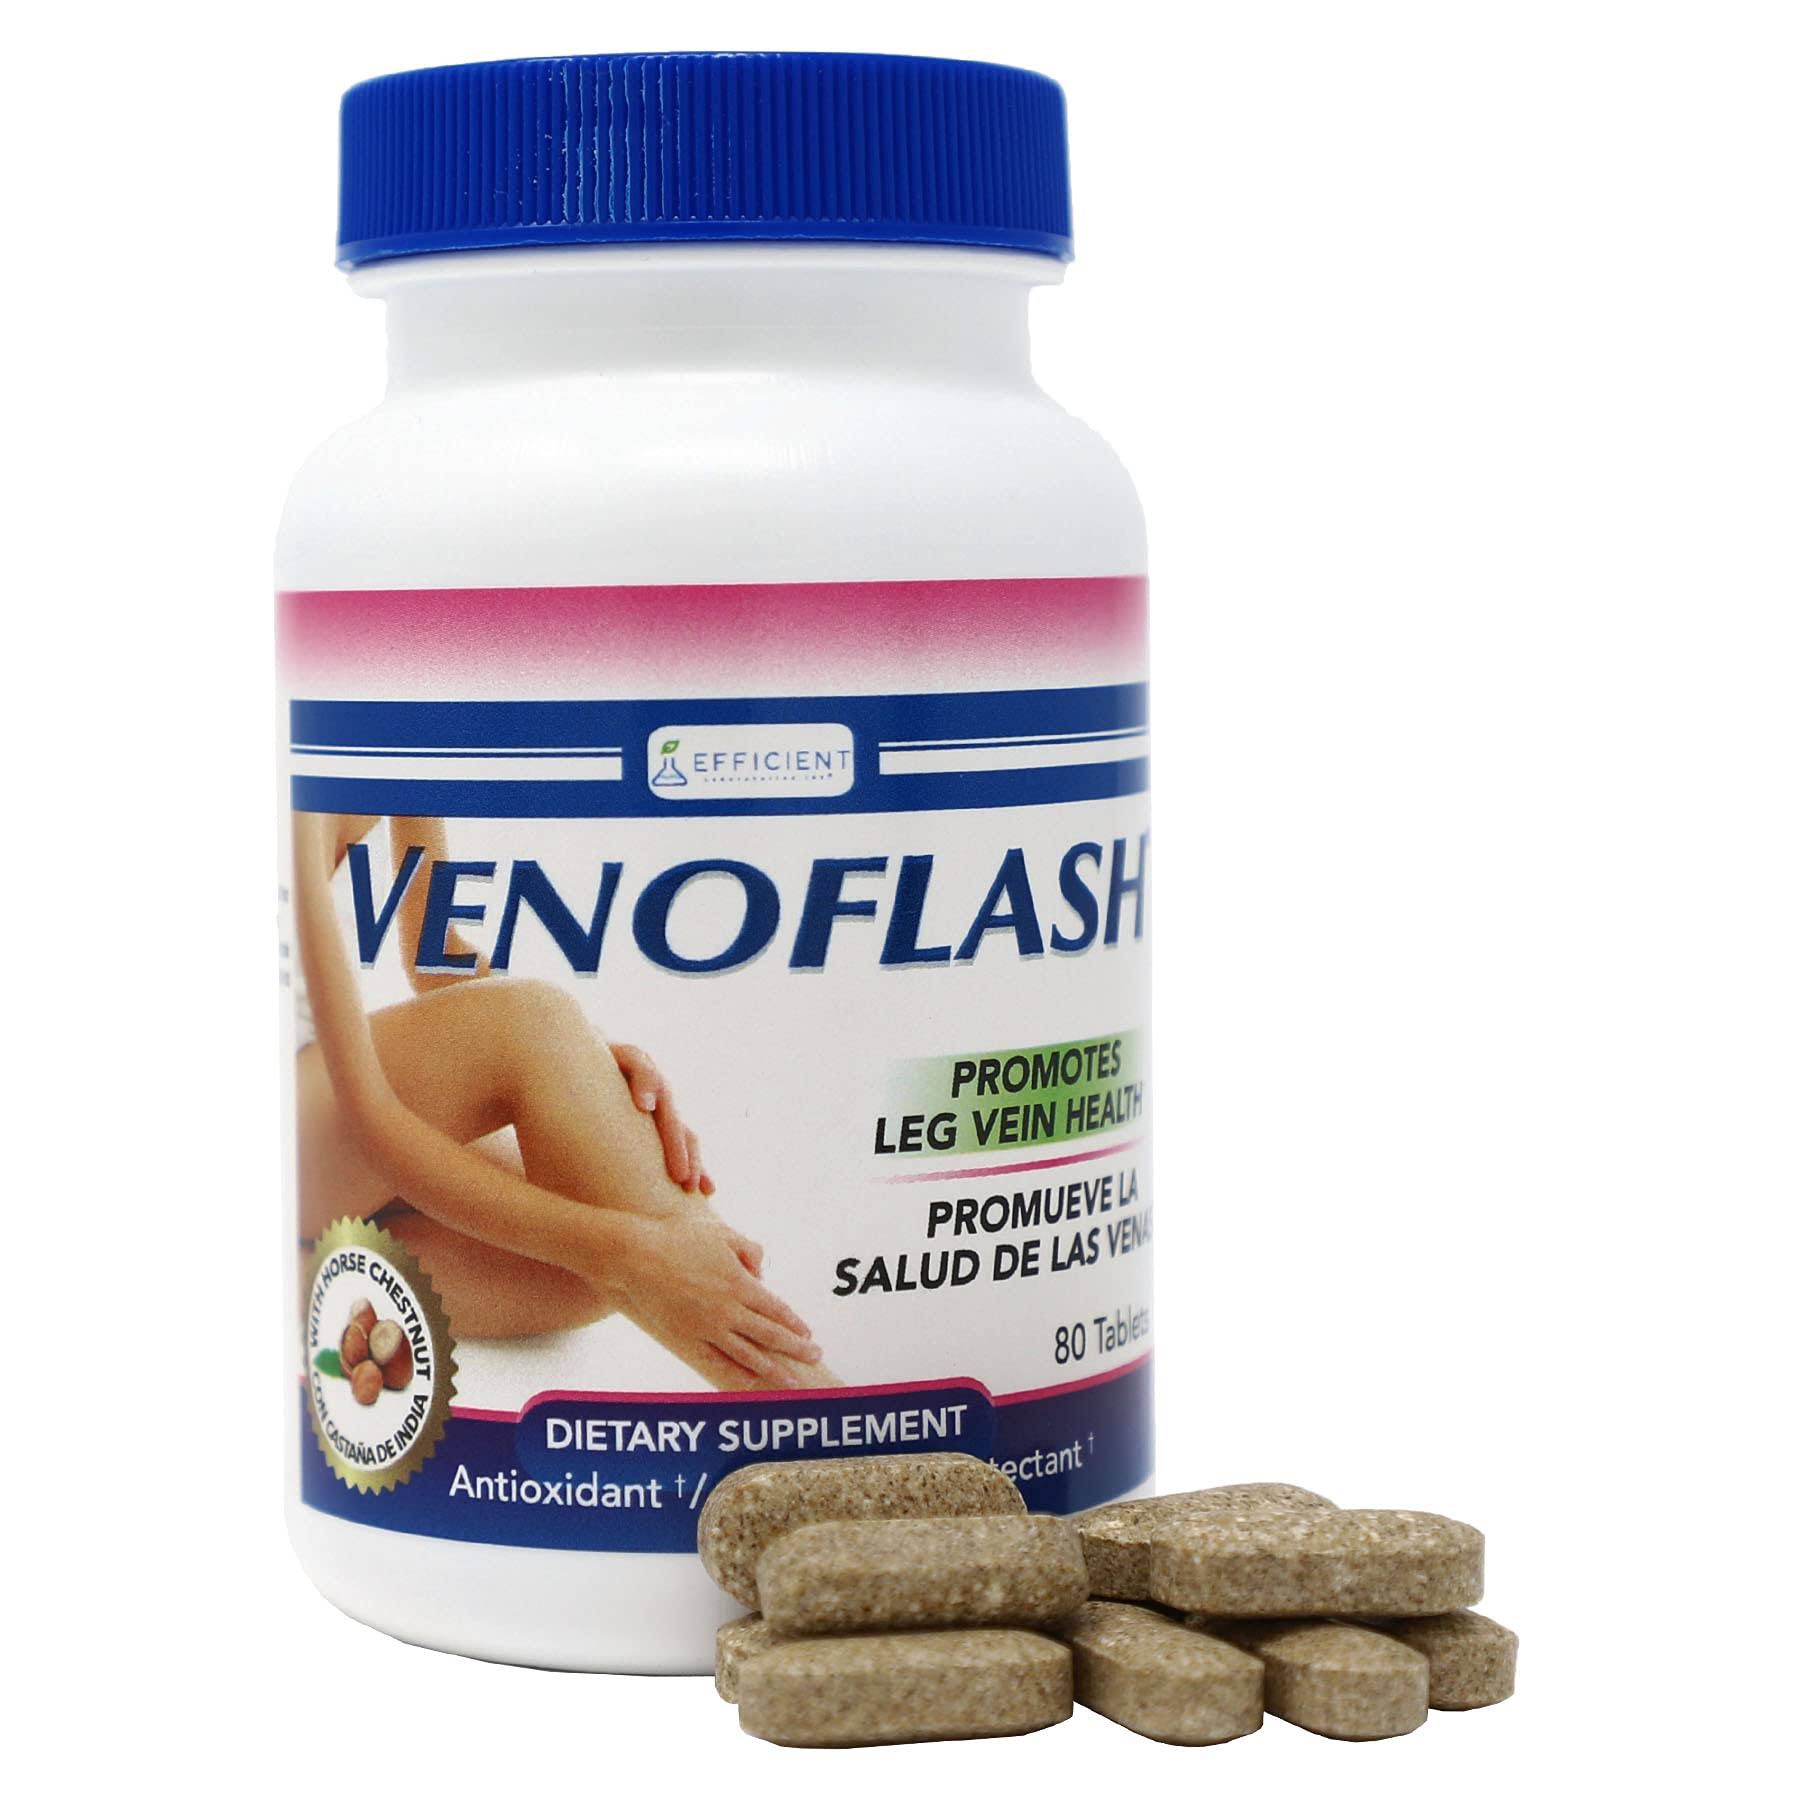 Venoflash Antioxidant Dietary Supplement - 80 Tablets